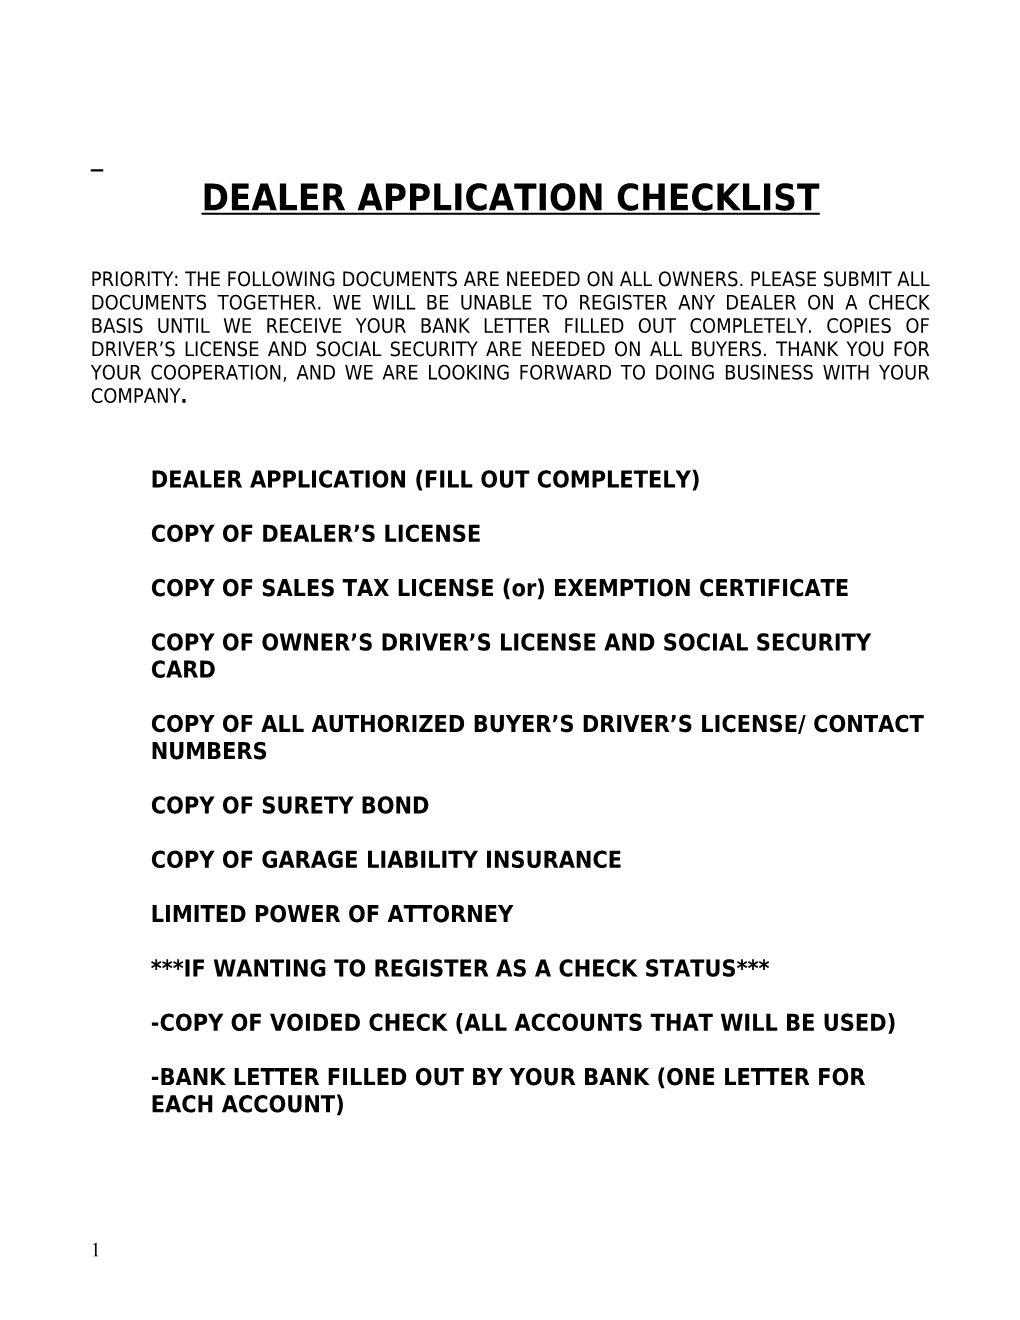 Dealer Application Checklist